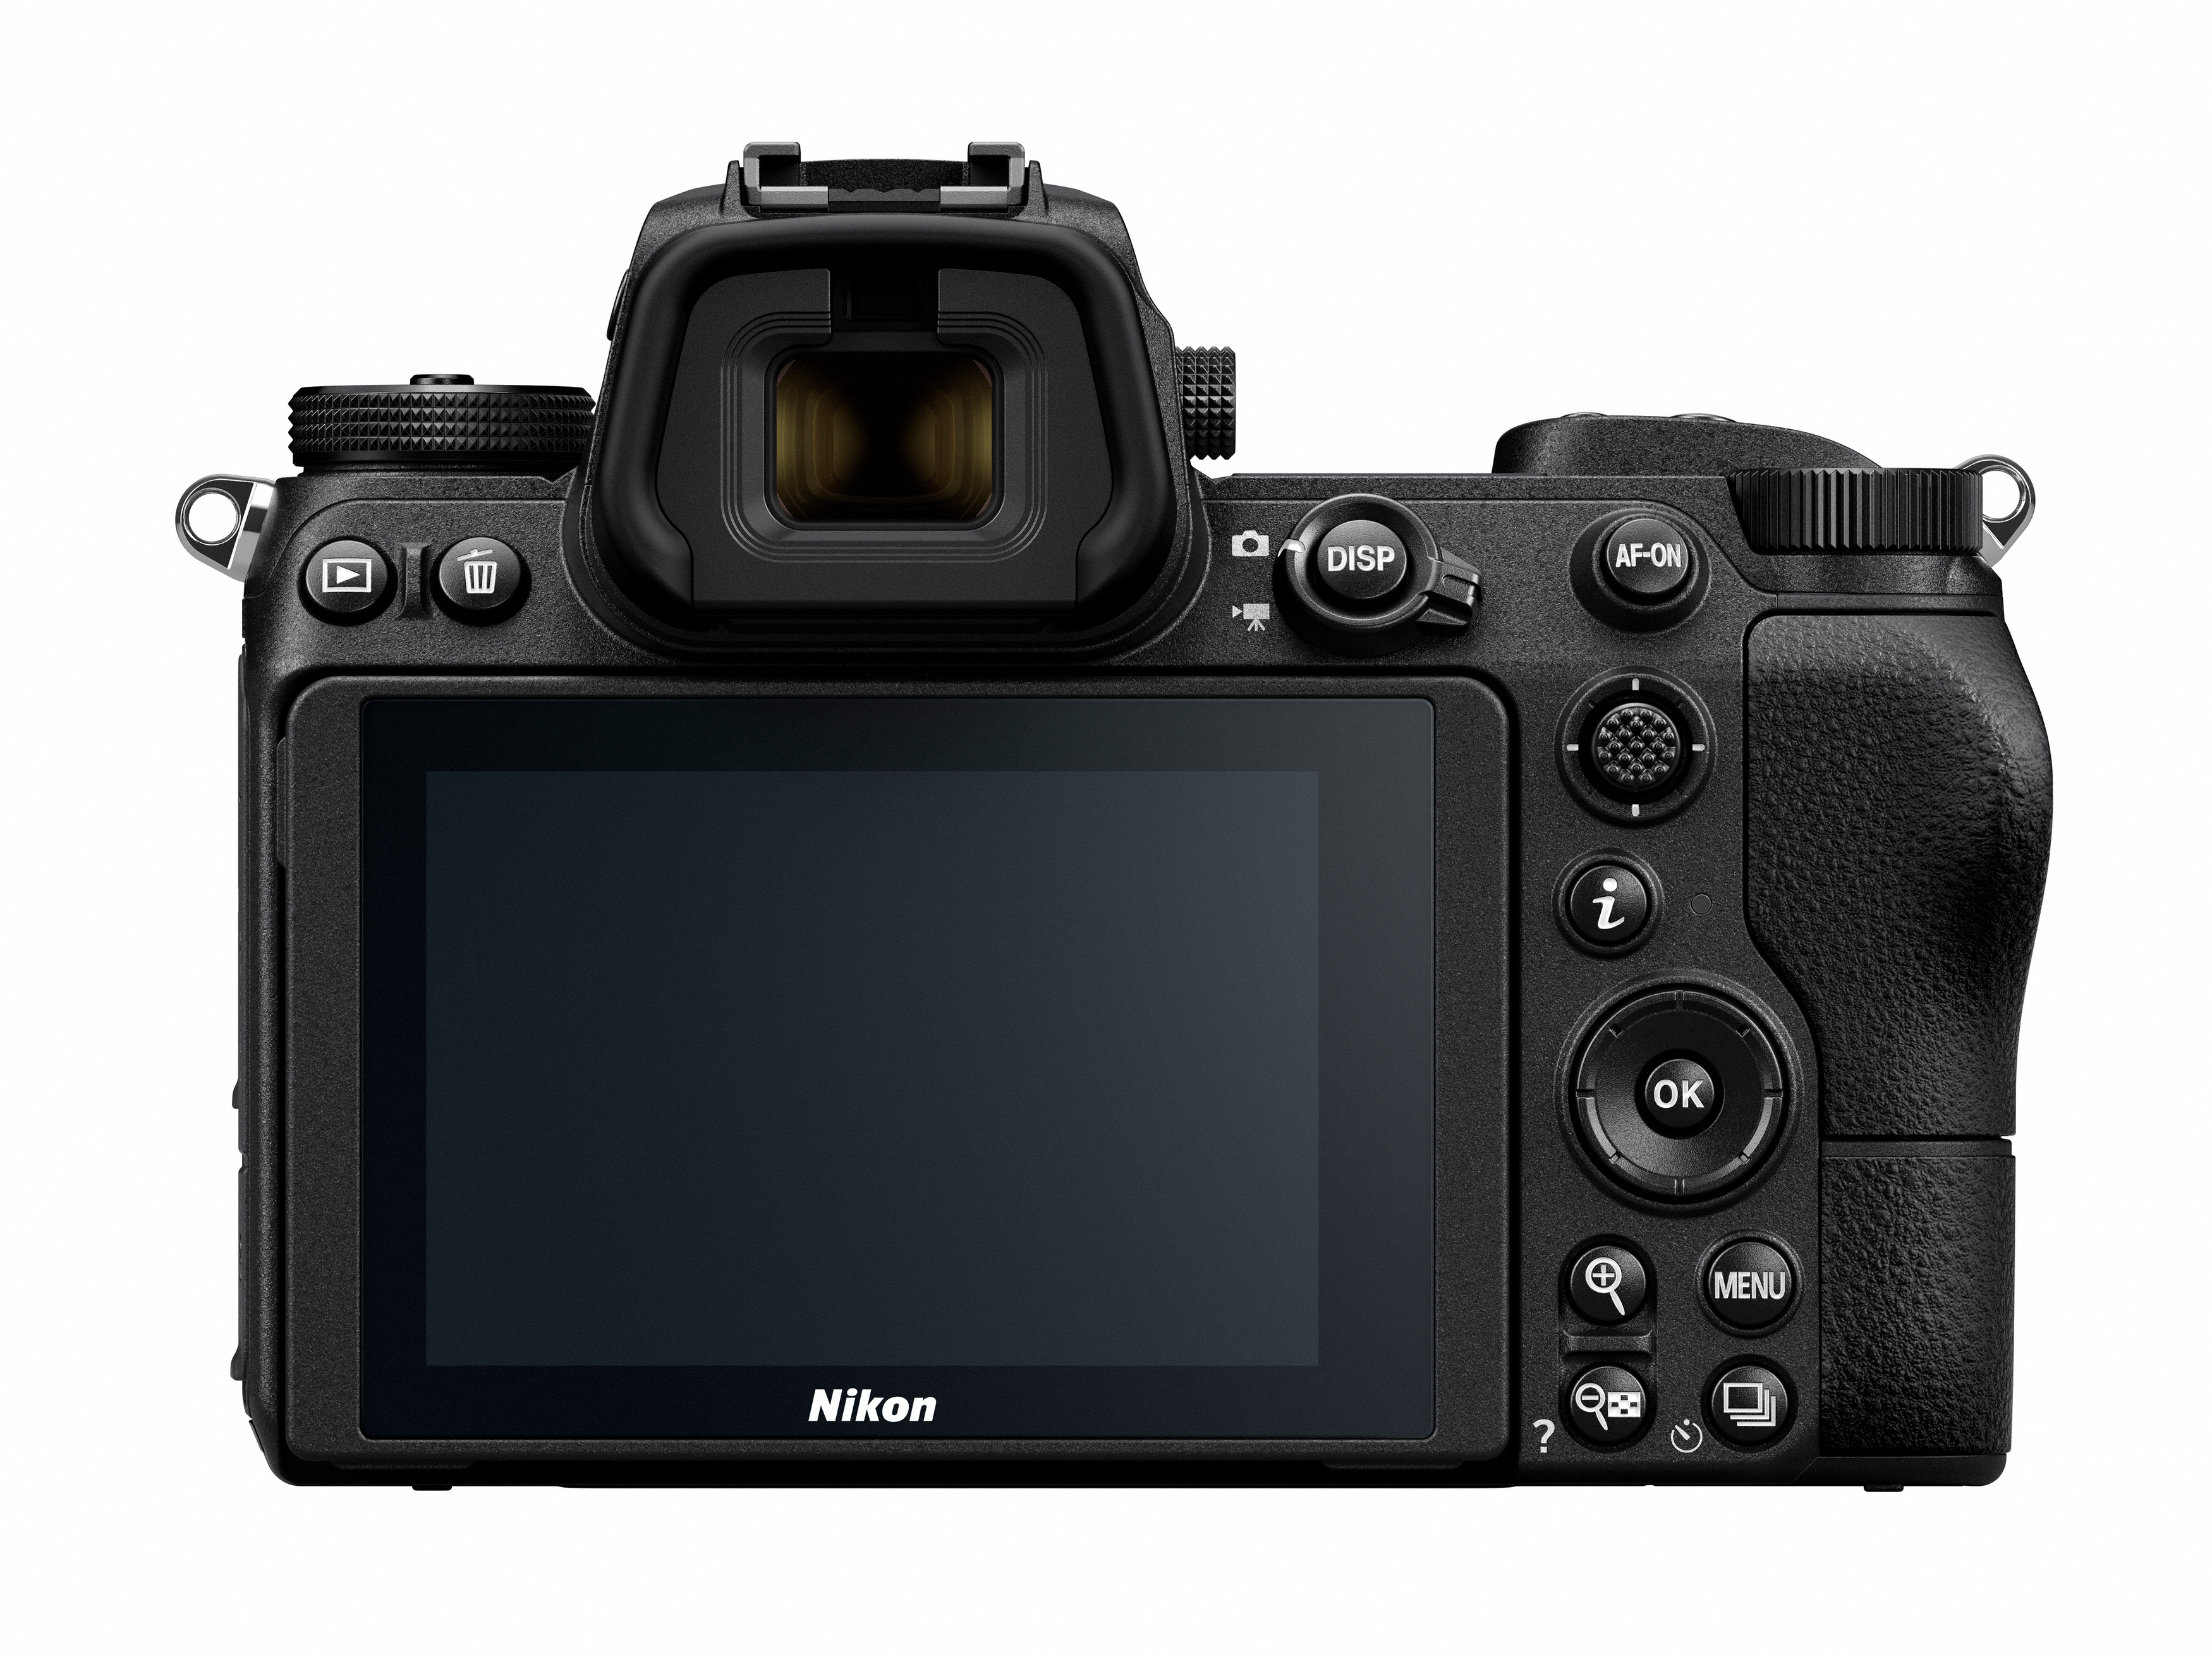 WLAN NIKON Display mm, cm mit Objektiv 14-30mm Systemkamera Z7 Touchscreen, 14-30 8